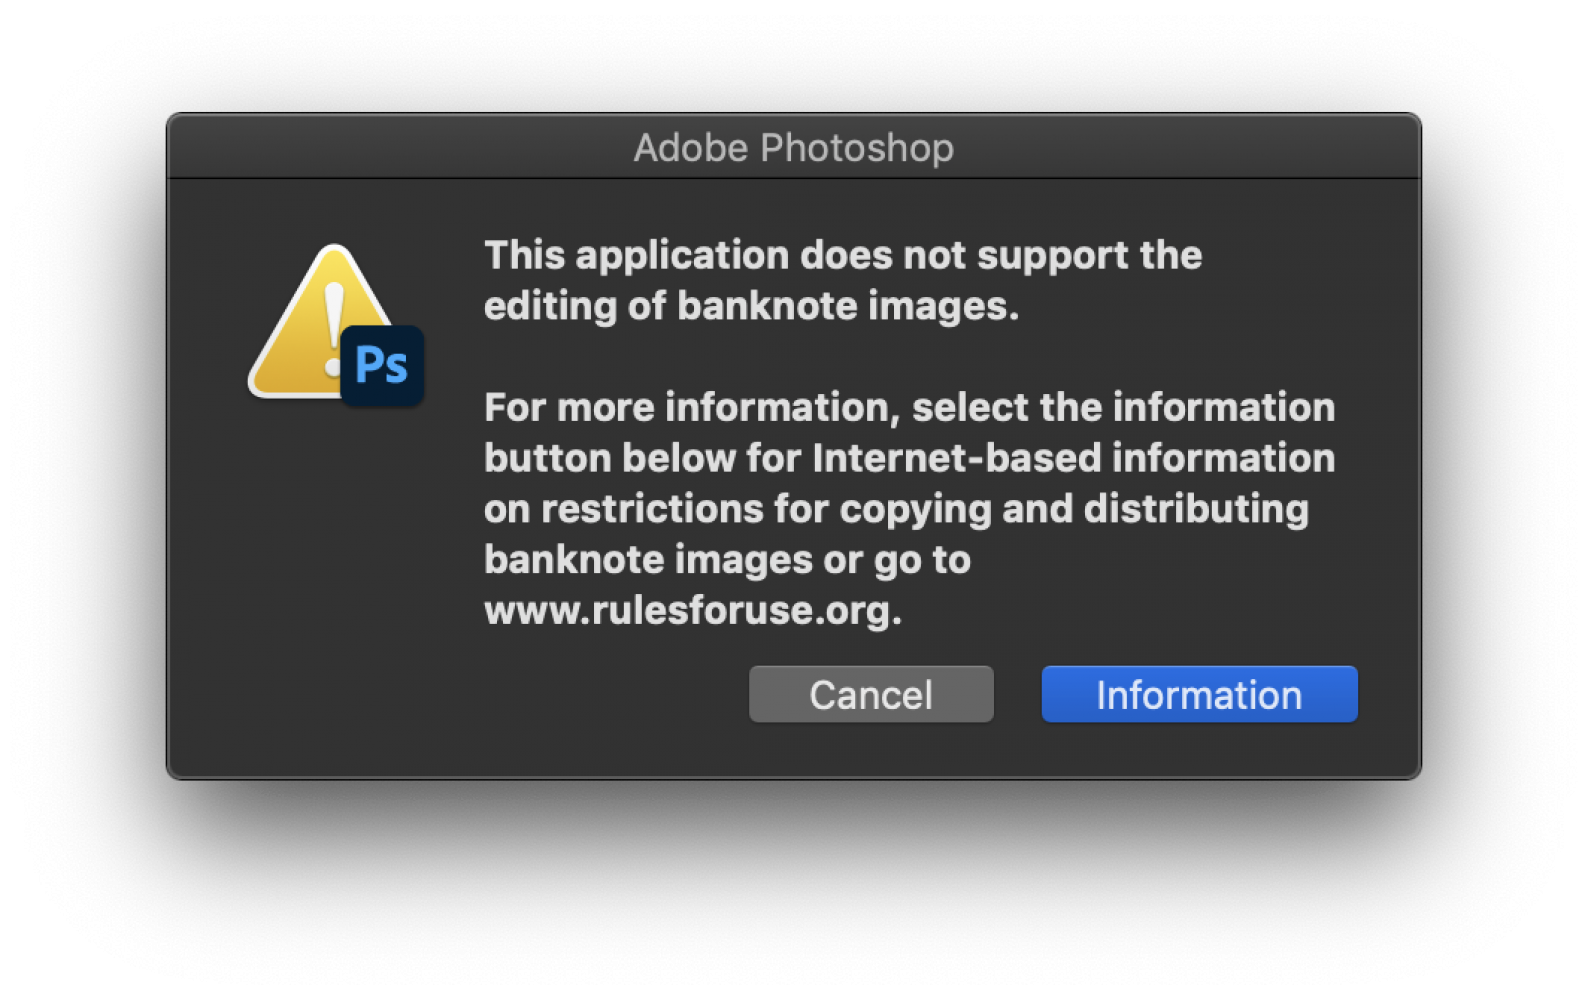 Figure 4: Warning dialog in Adobe Photoshop